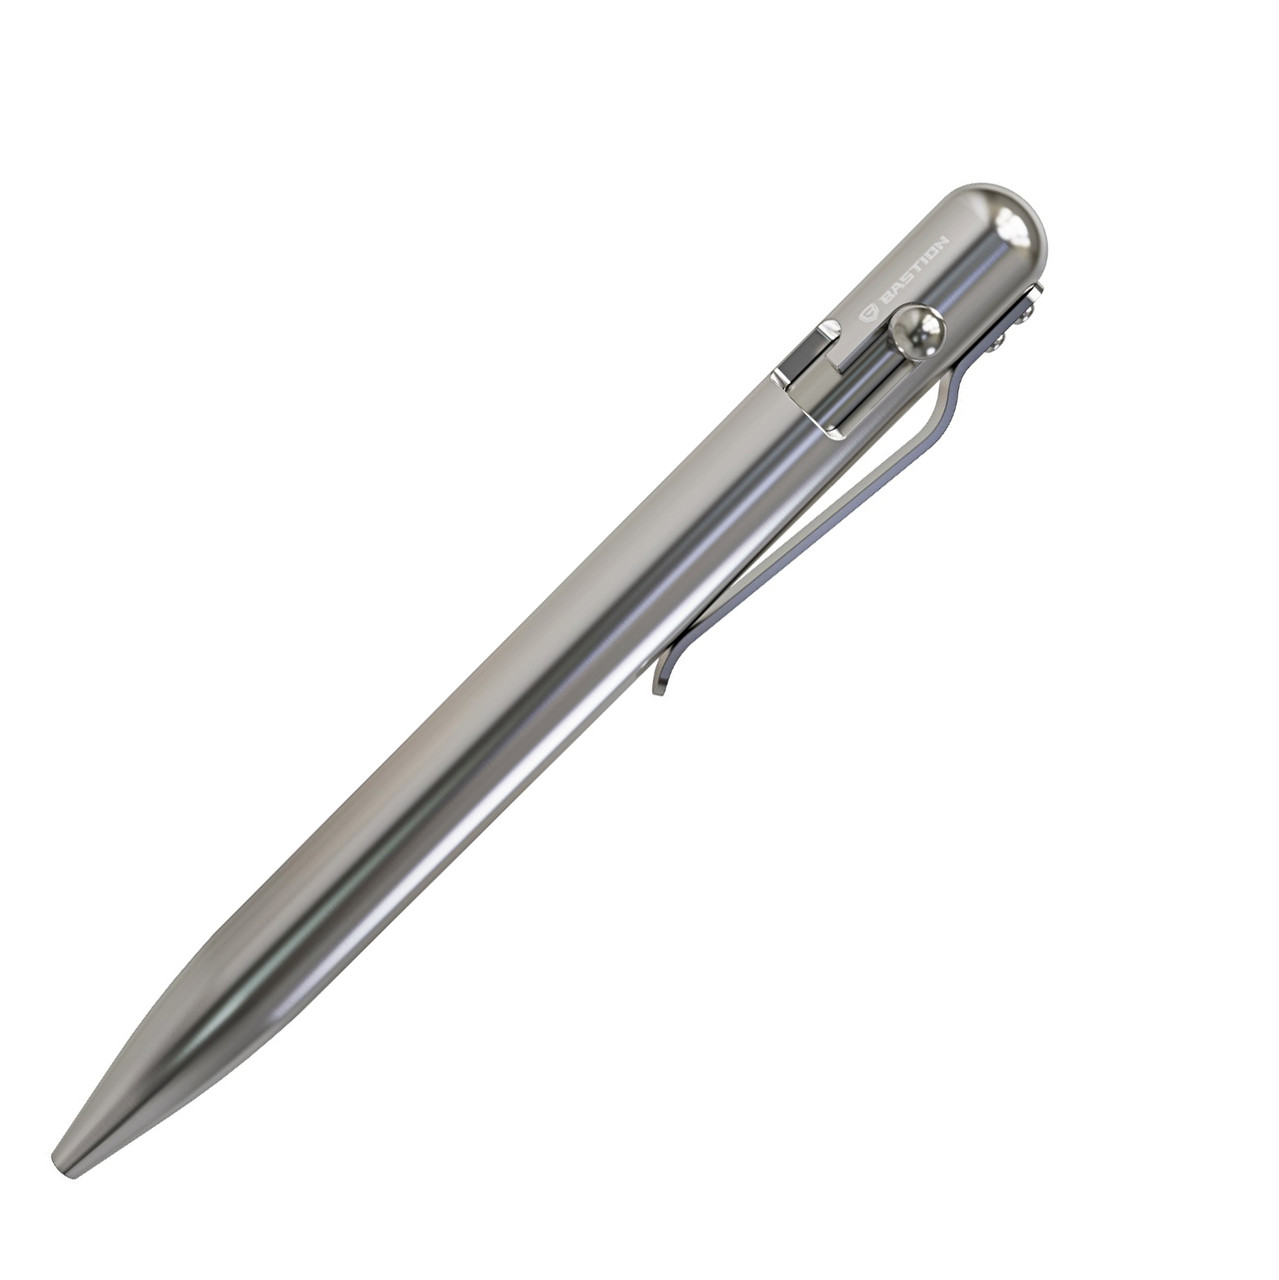 Bastion Bolt Action Pen BSTN223, 5.25" Metal Stainless Steel Body w/ Black Ink